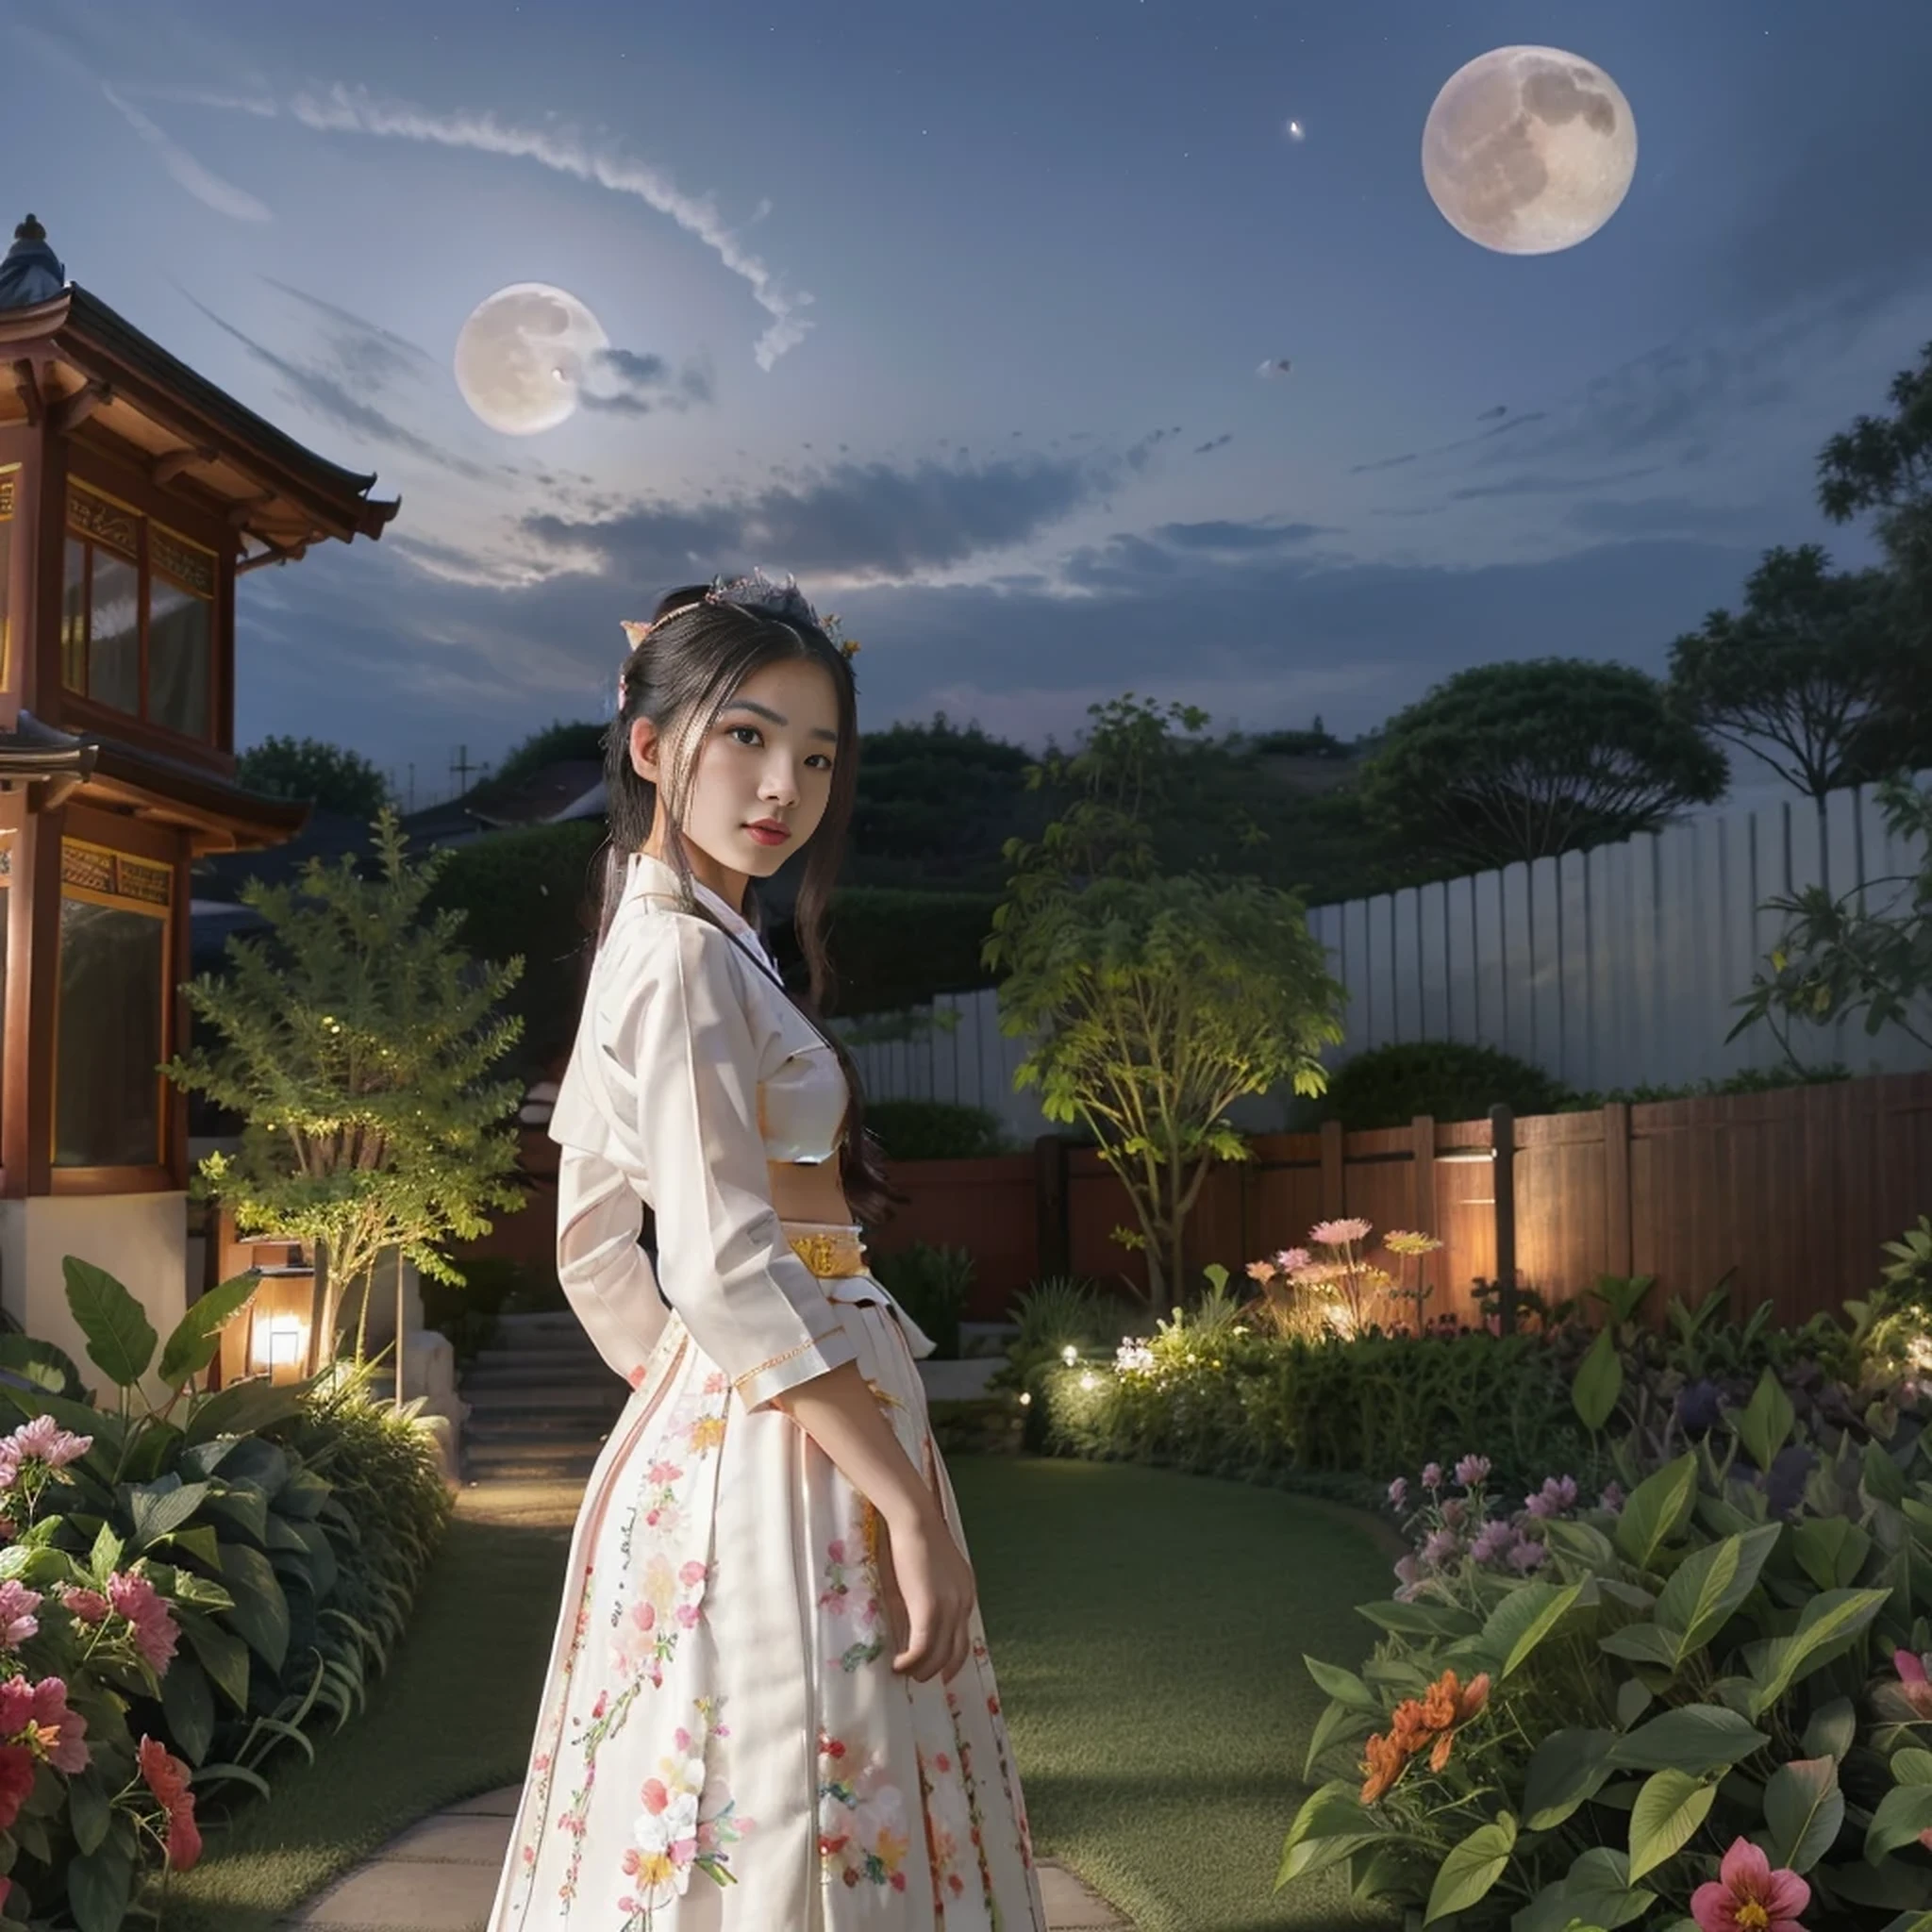 best quality, high_resolution, distinct_image, detailed background ,girl, hanbok,flower,garden,moon, night,dutch angle, wide shot, crown,